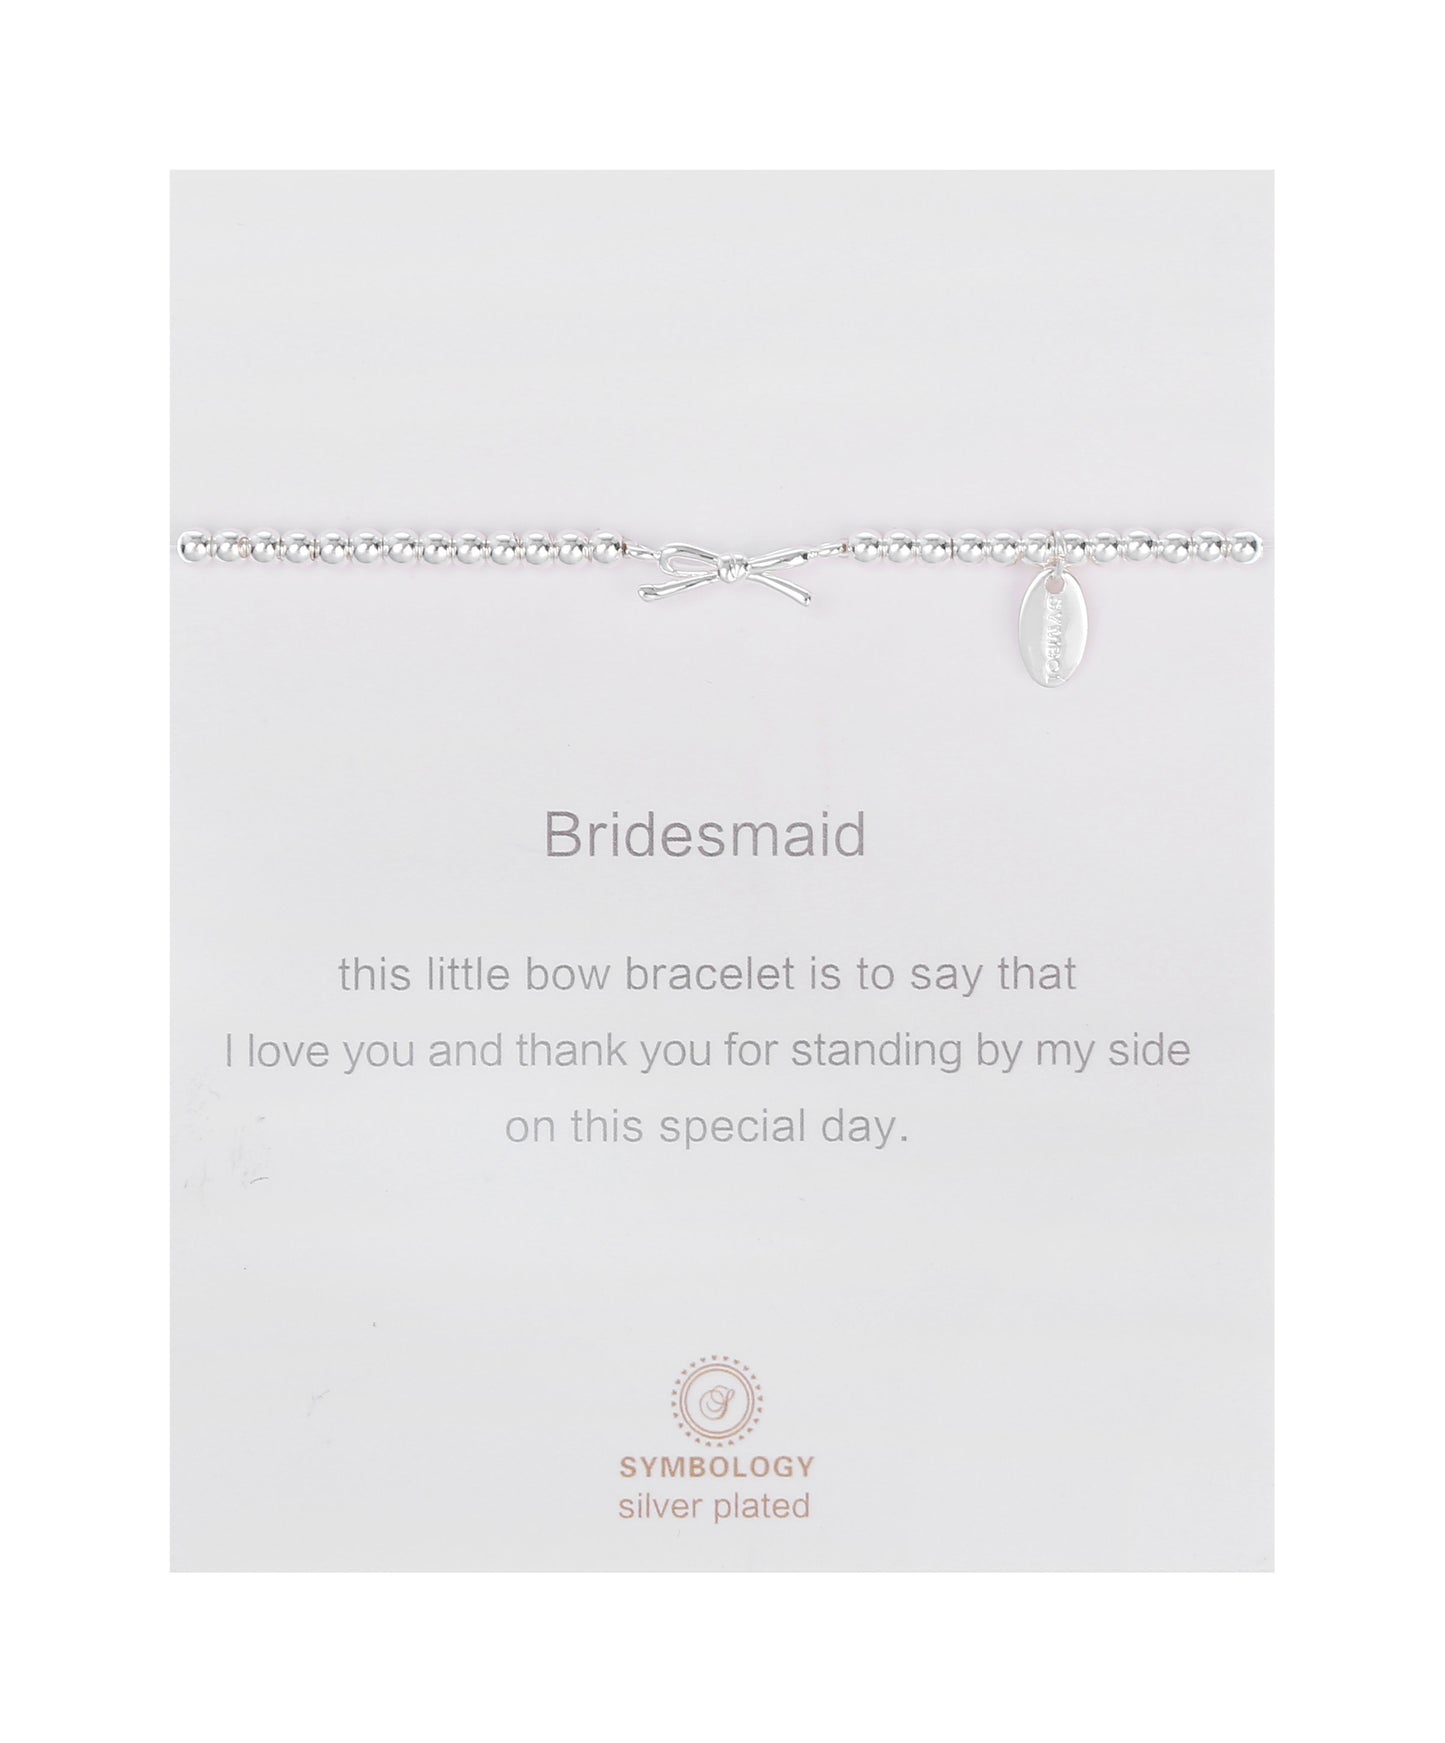 Bridesmaid Bracelet